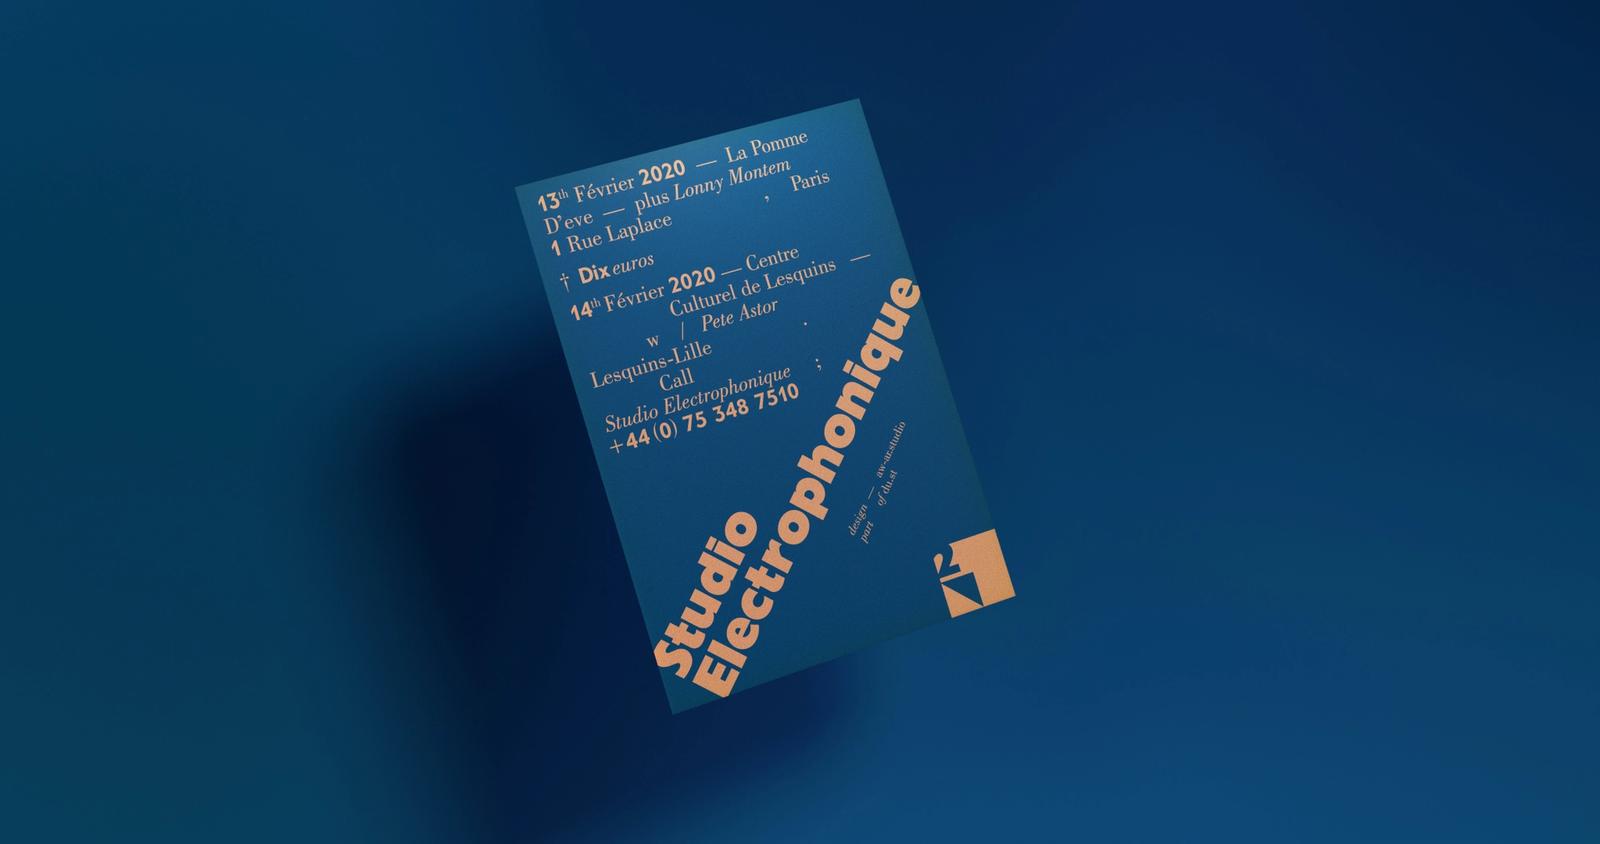 Flyer designed for Studio Electrophonique.